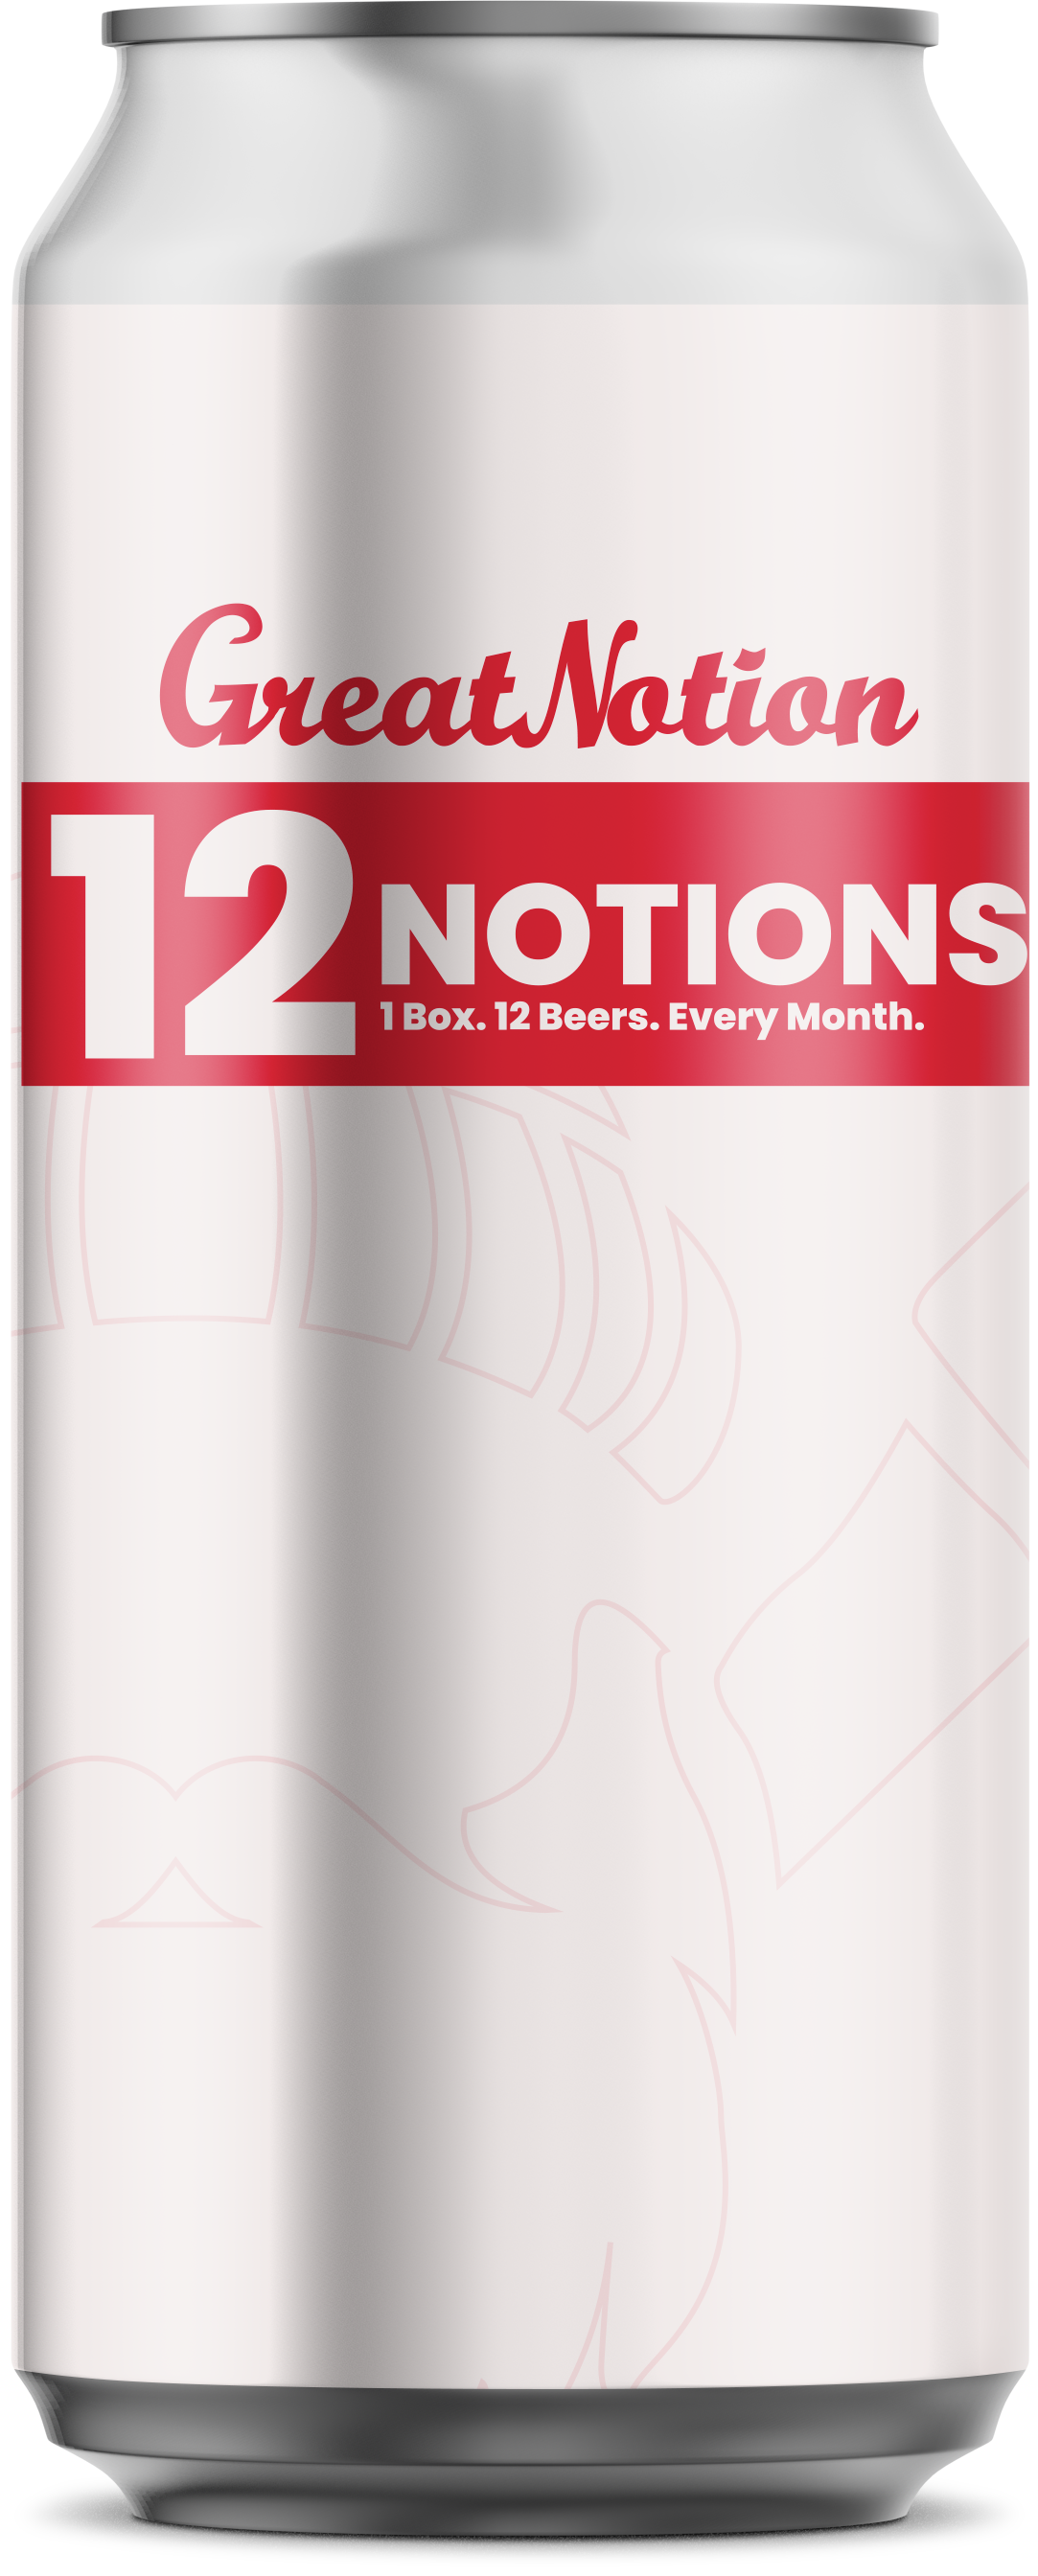 12 Notions - January